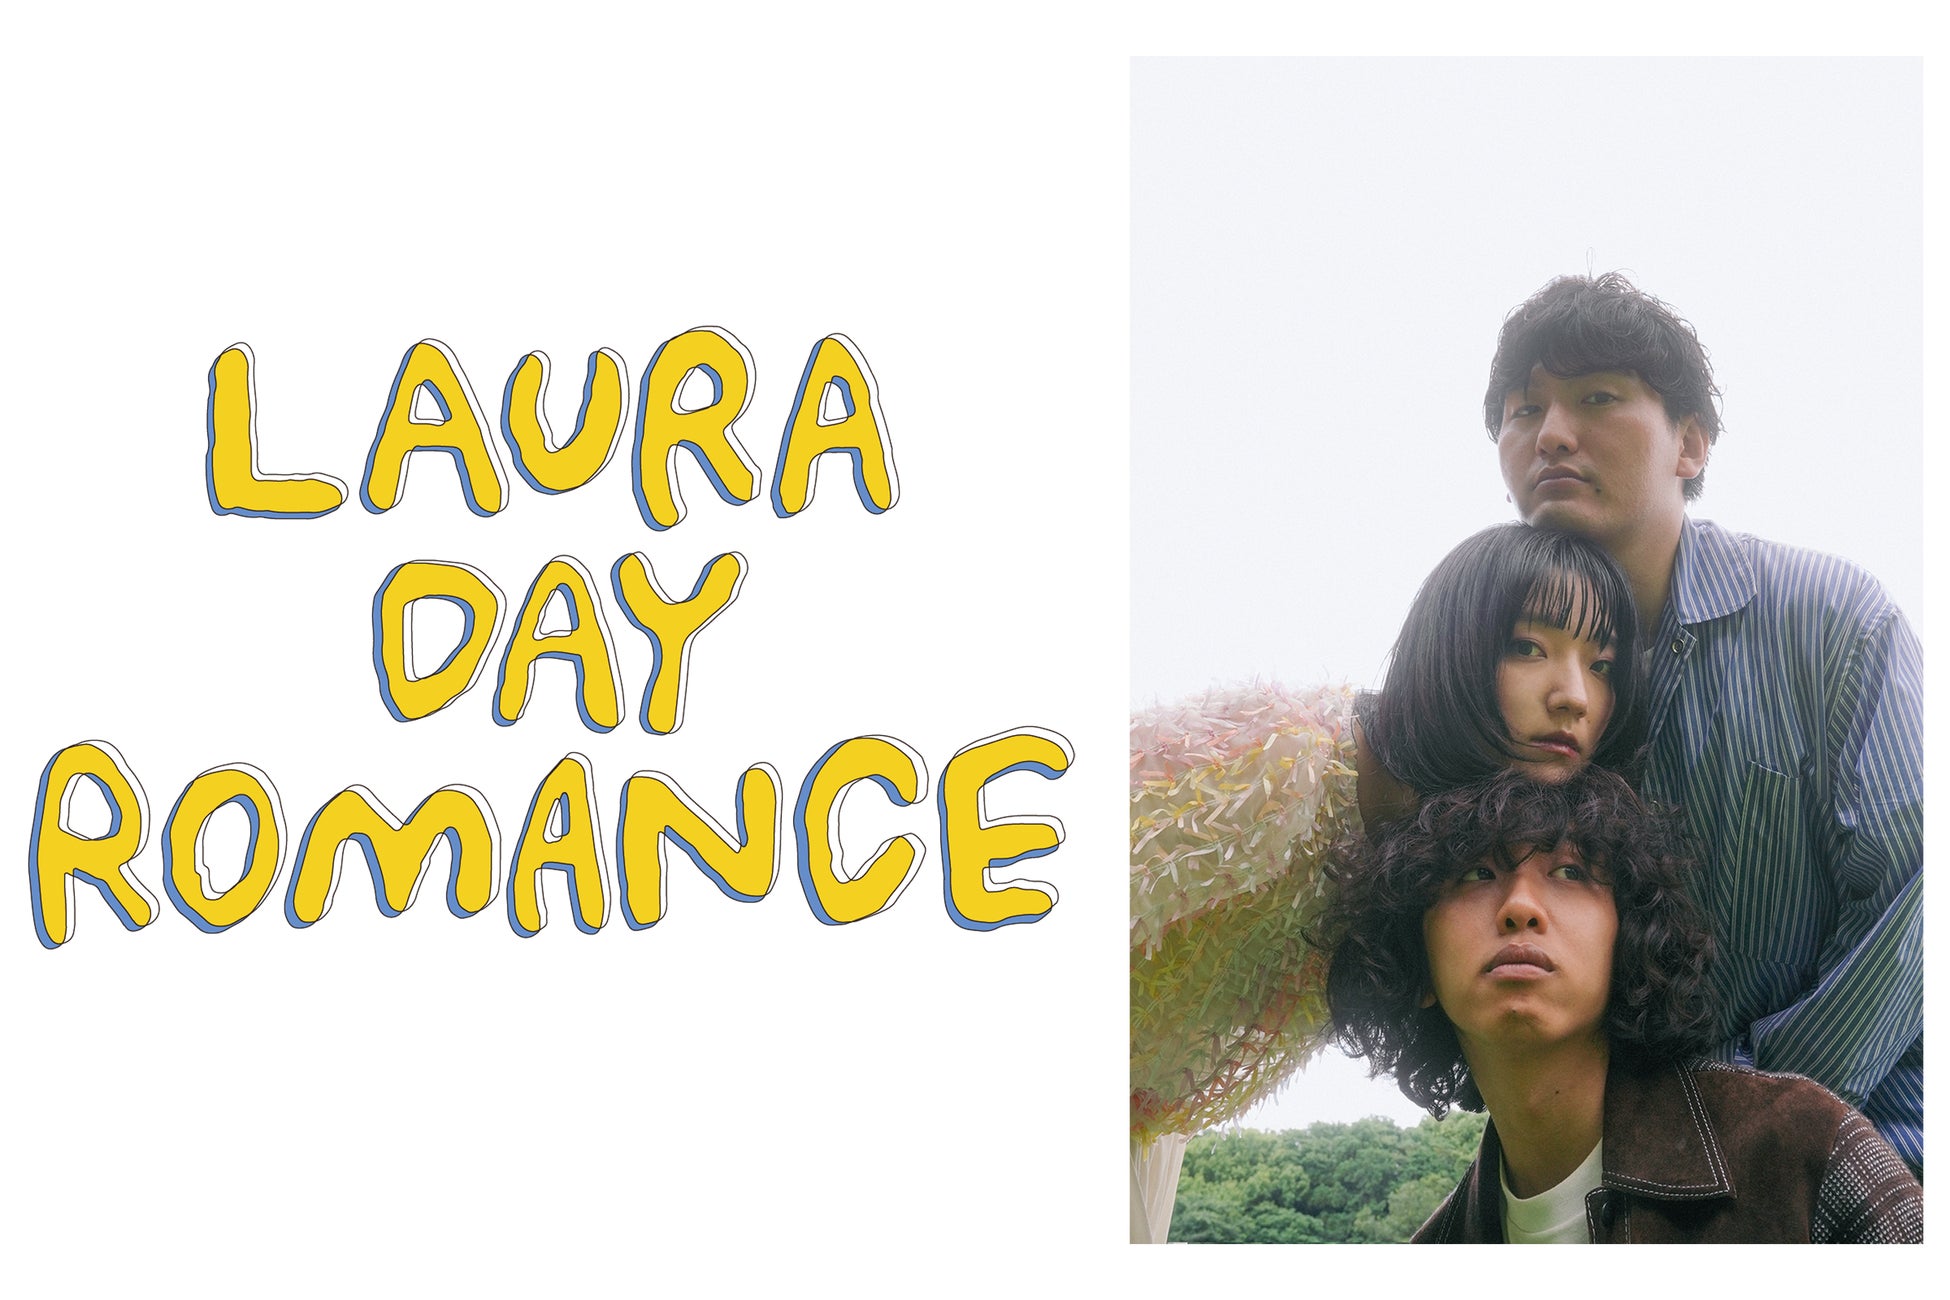 Laura day romance公式ファンクラブ「只今より、古参」を開設！8月30日(水)新代田Feverにてワンマンライブの開催も決定！